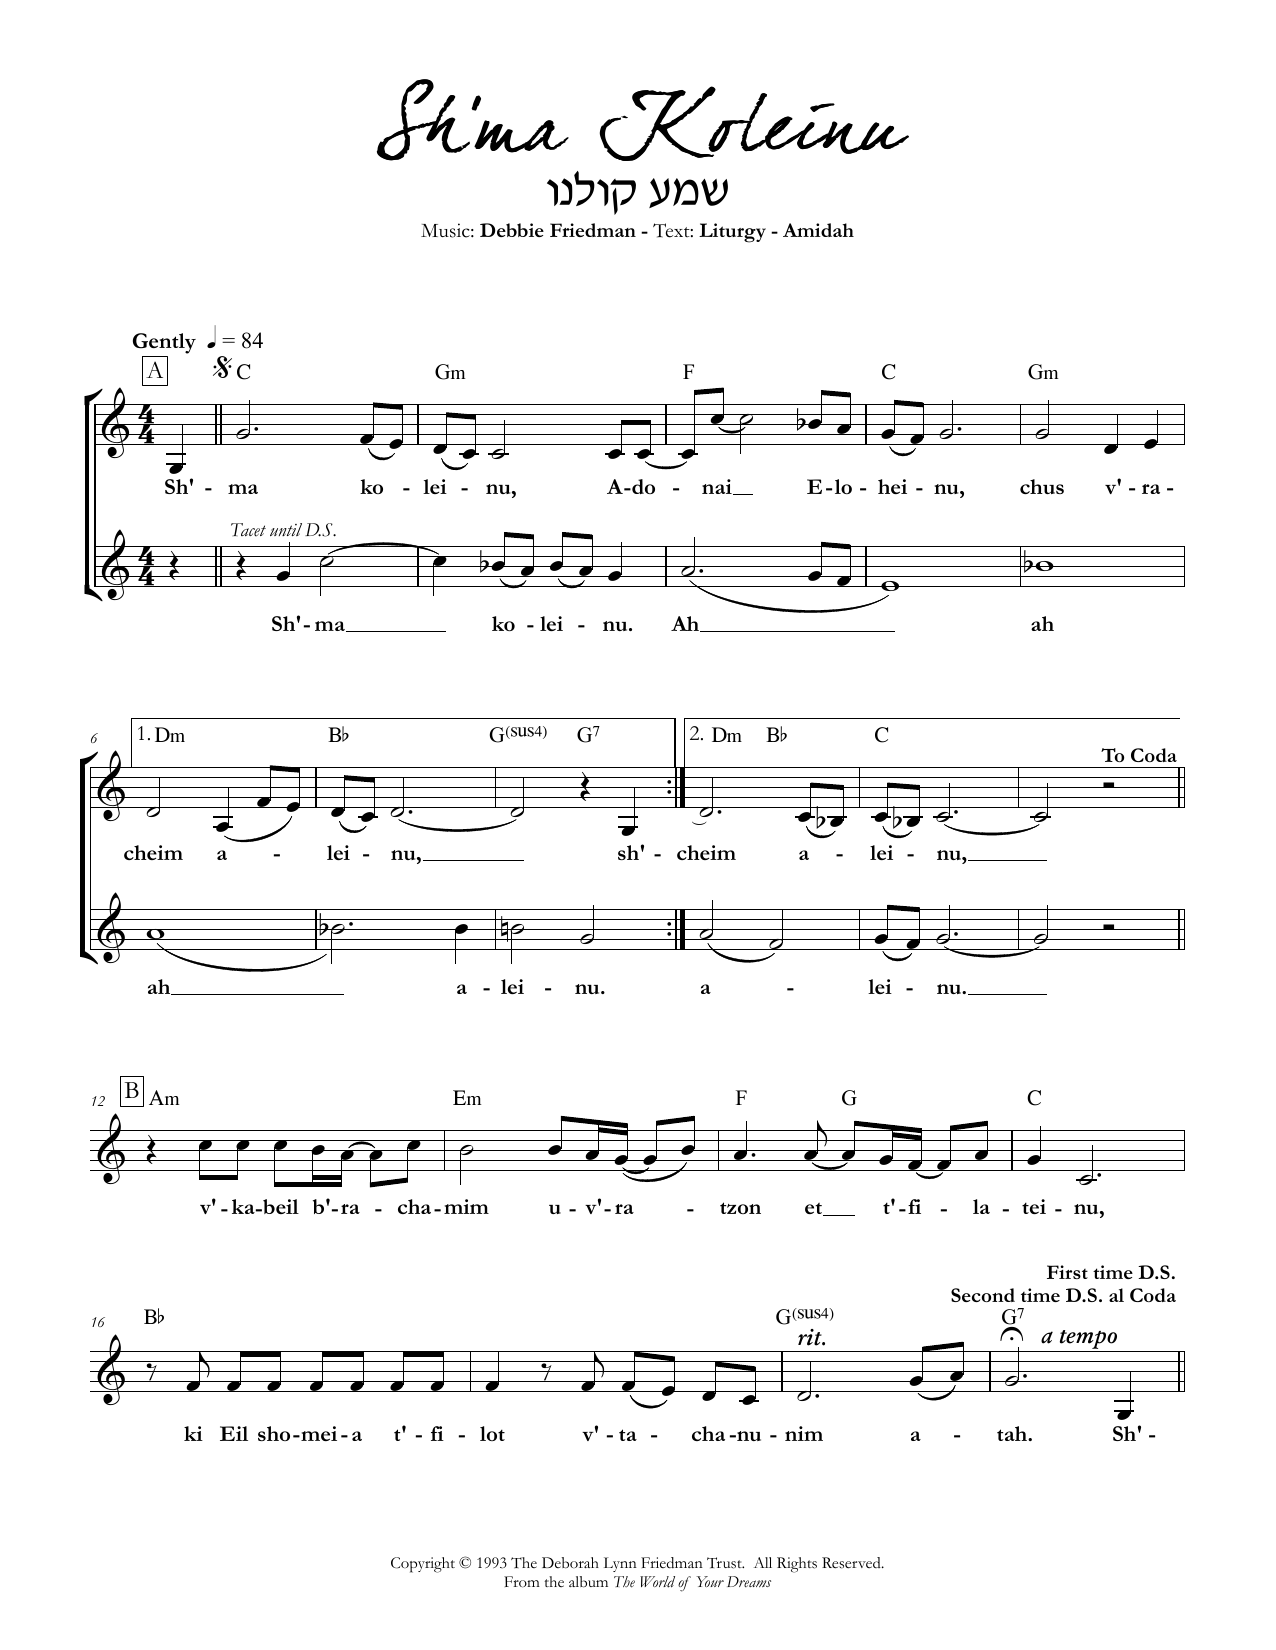 Download Debbie Friedman Sh'ma Koleinu Sheet Music and learn how to play Lead Sheet / Fake Book PDF digital score in minutes